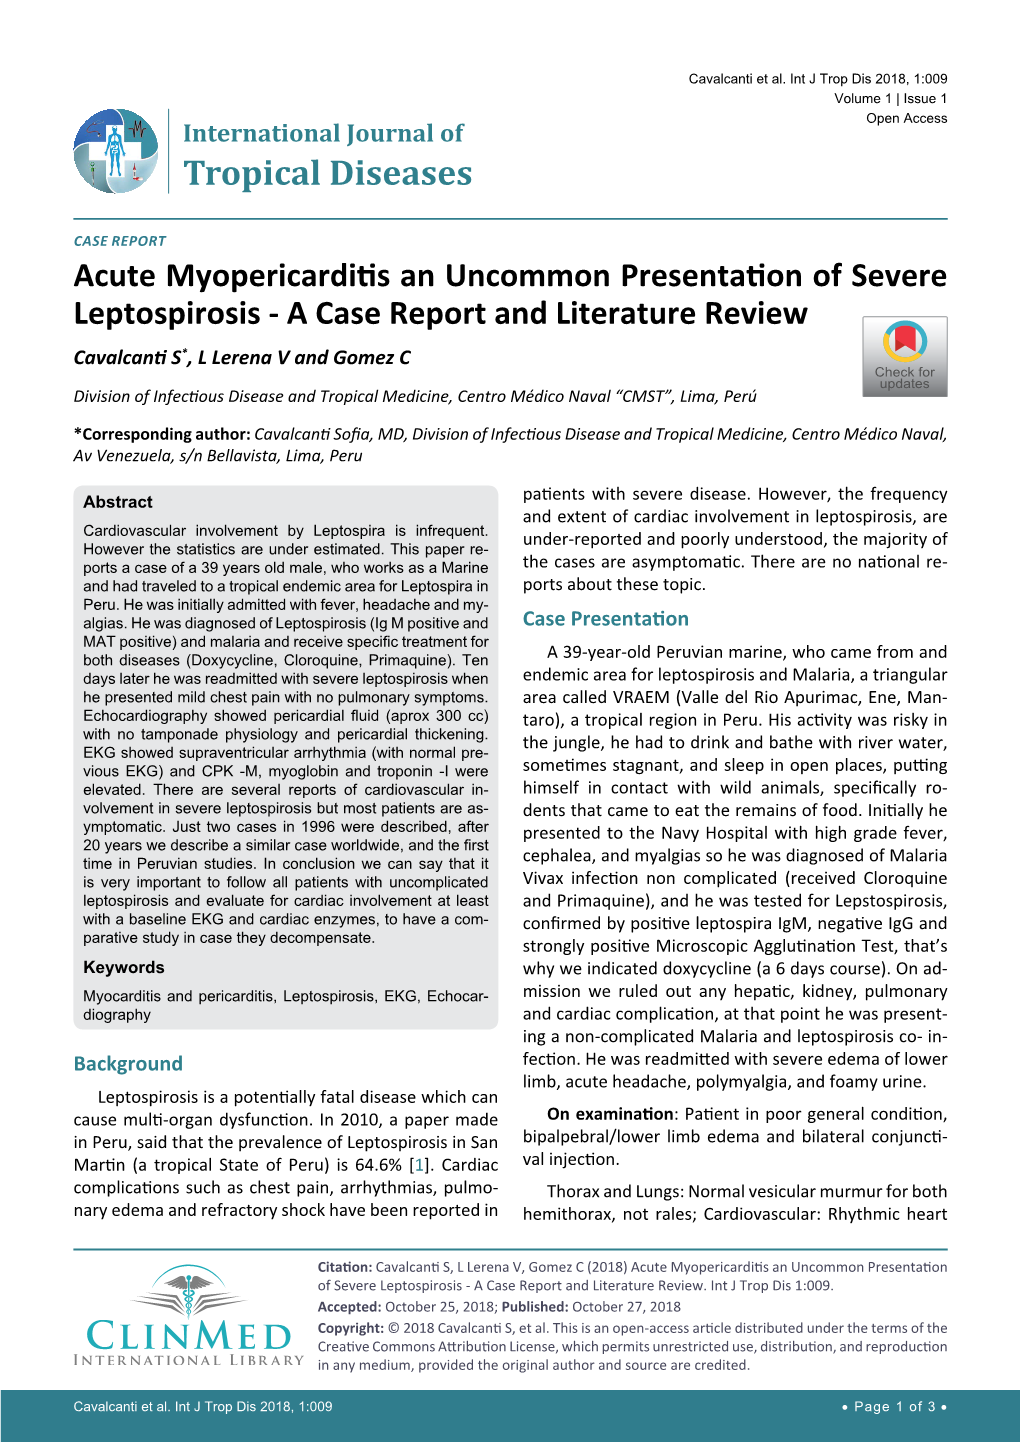 Acute Myopericarditis an Uncommon Presentation of Severe Leptospirosis